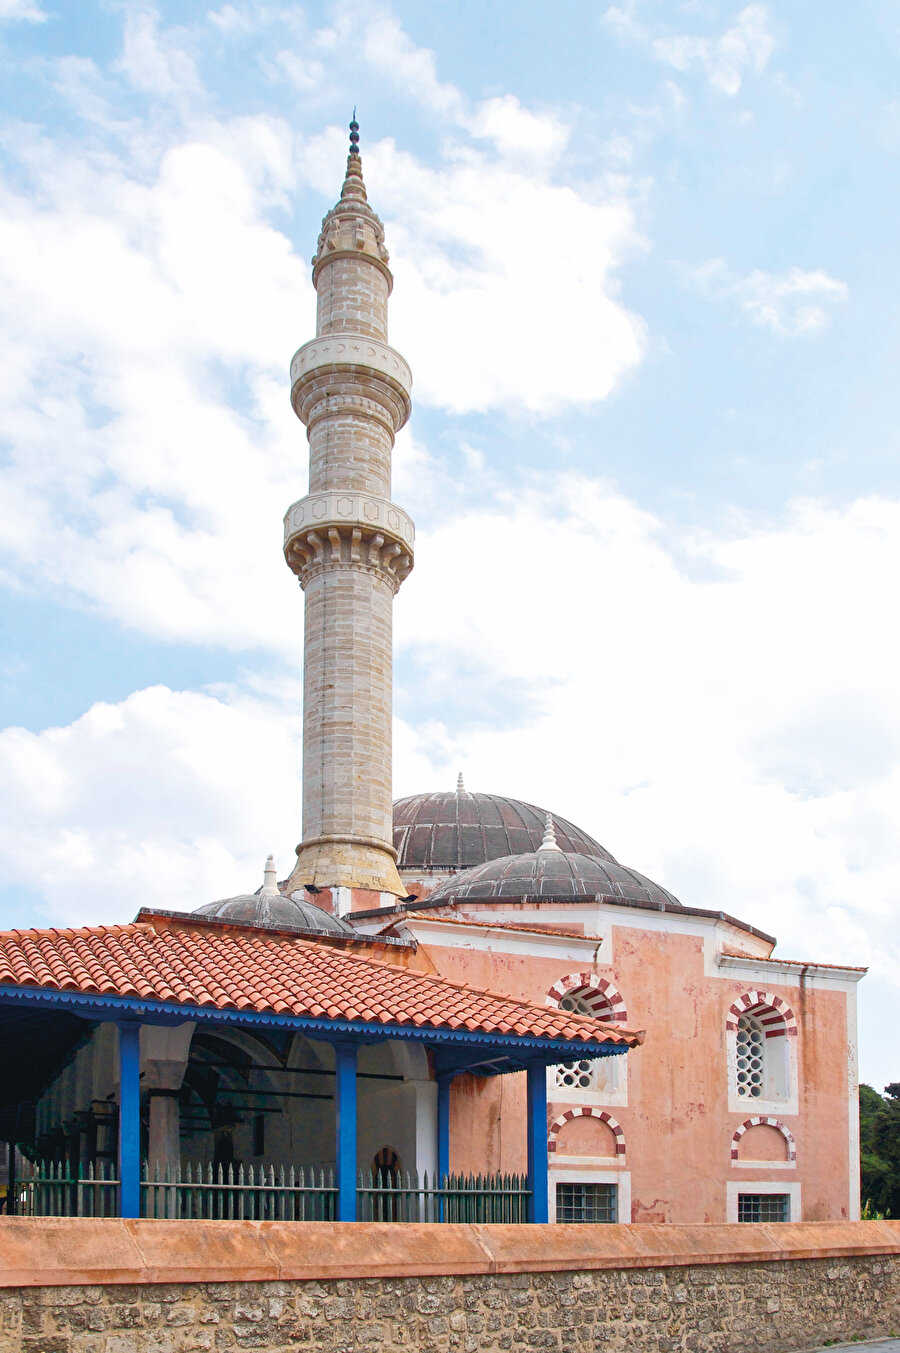 1522 tarihli Rodos'un fethinde yapılmış ilk cami, Süleyman Camisi.